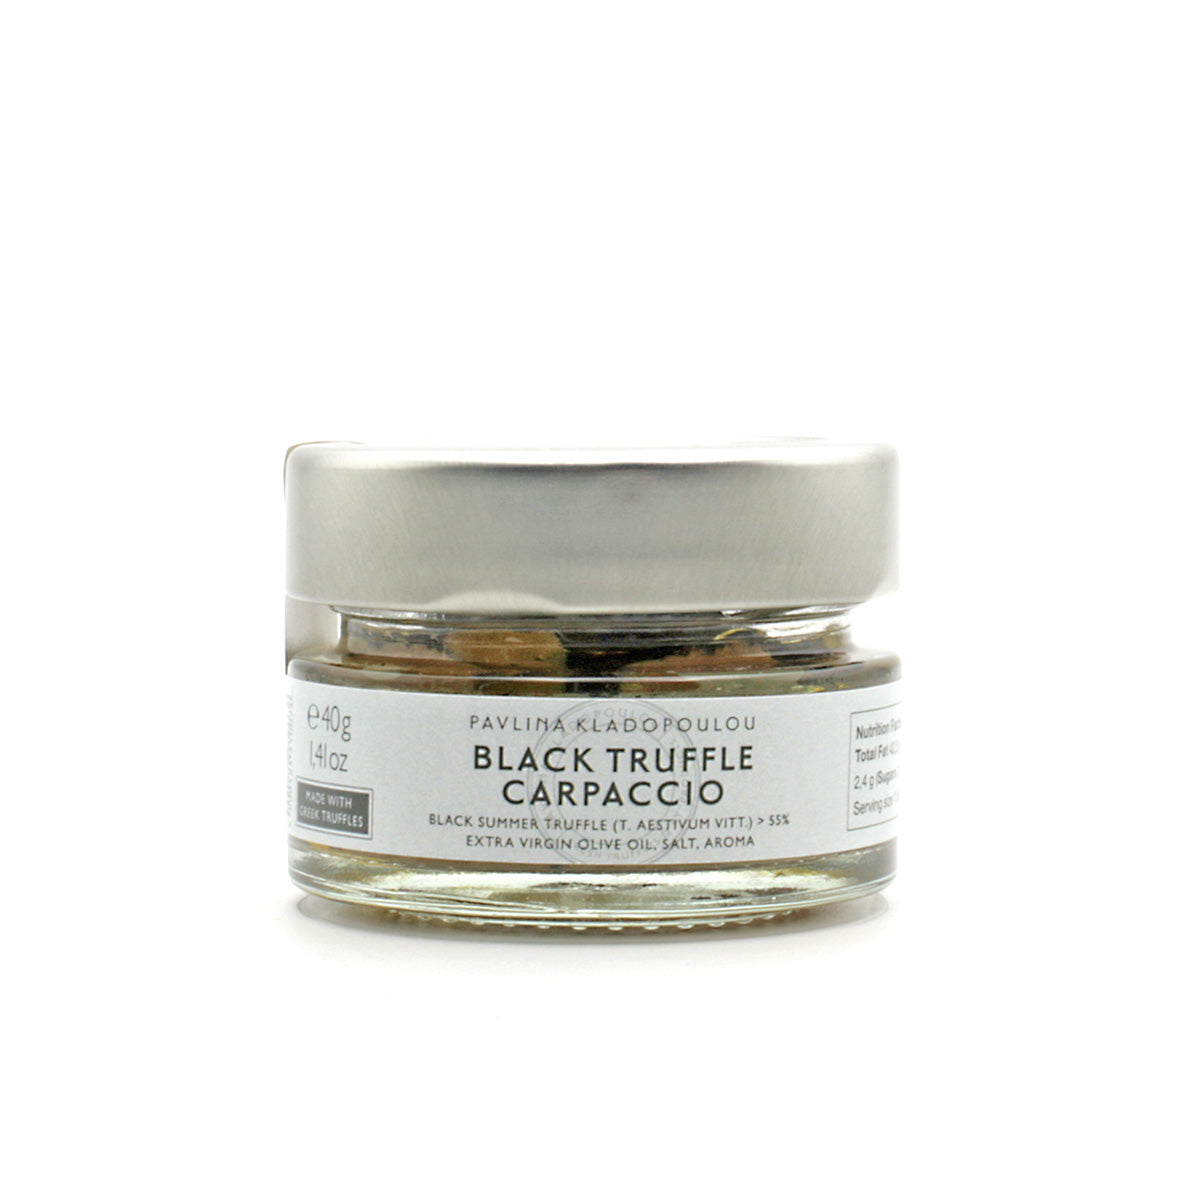 Black Truffle Carpaccio 30g